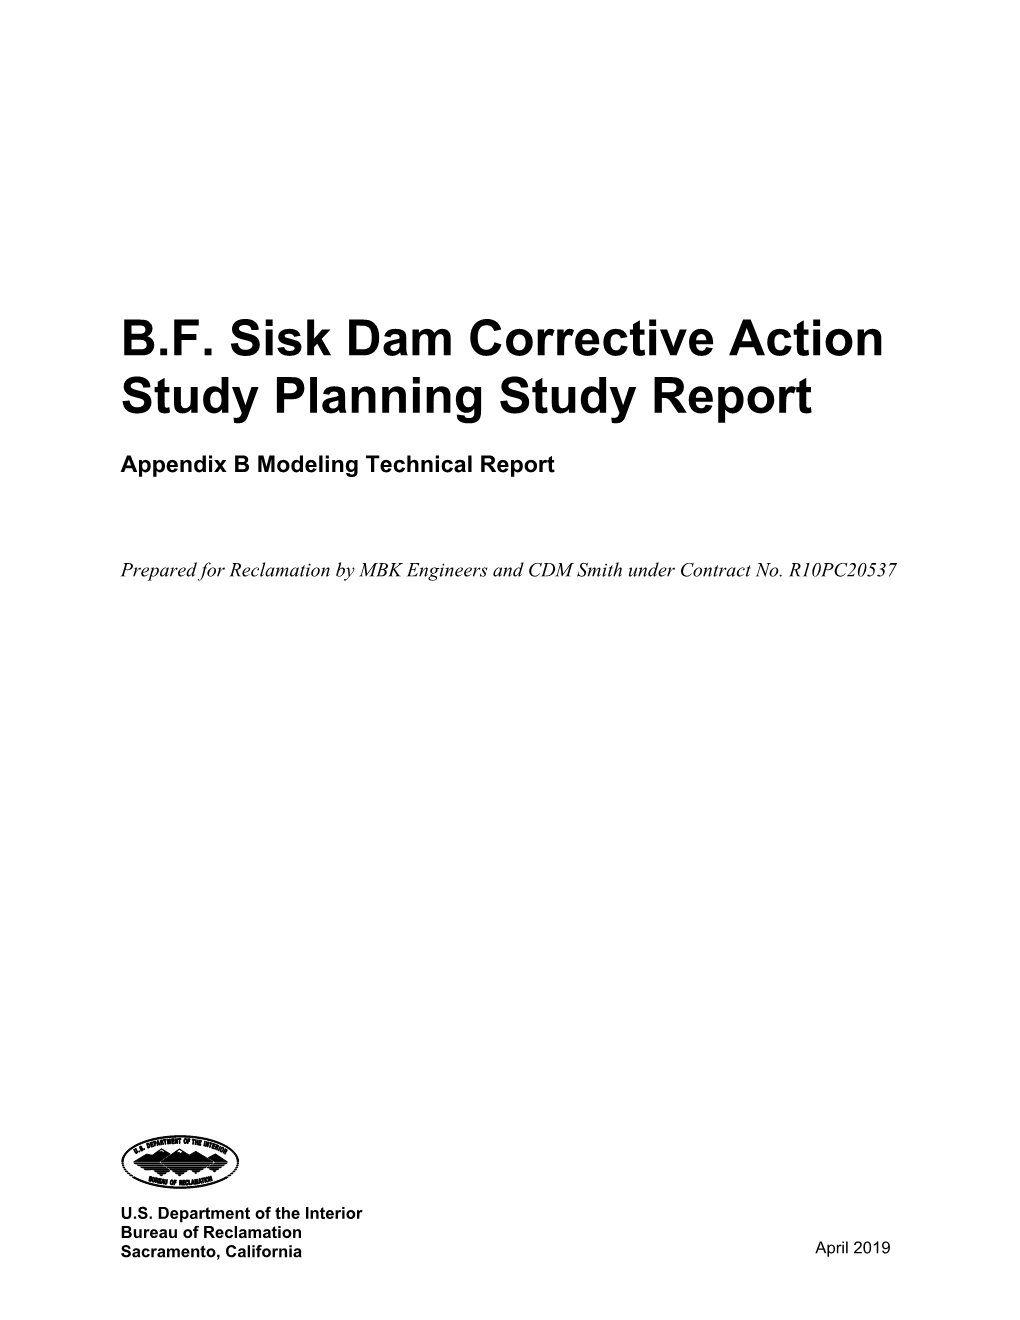 B.F. Sisk Dam SOD Project EIS/EIR Appendix B Modeling Technical Report